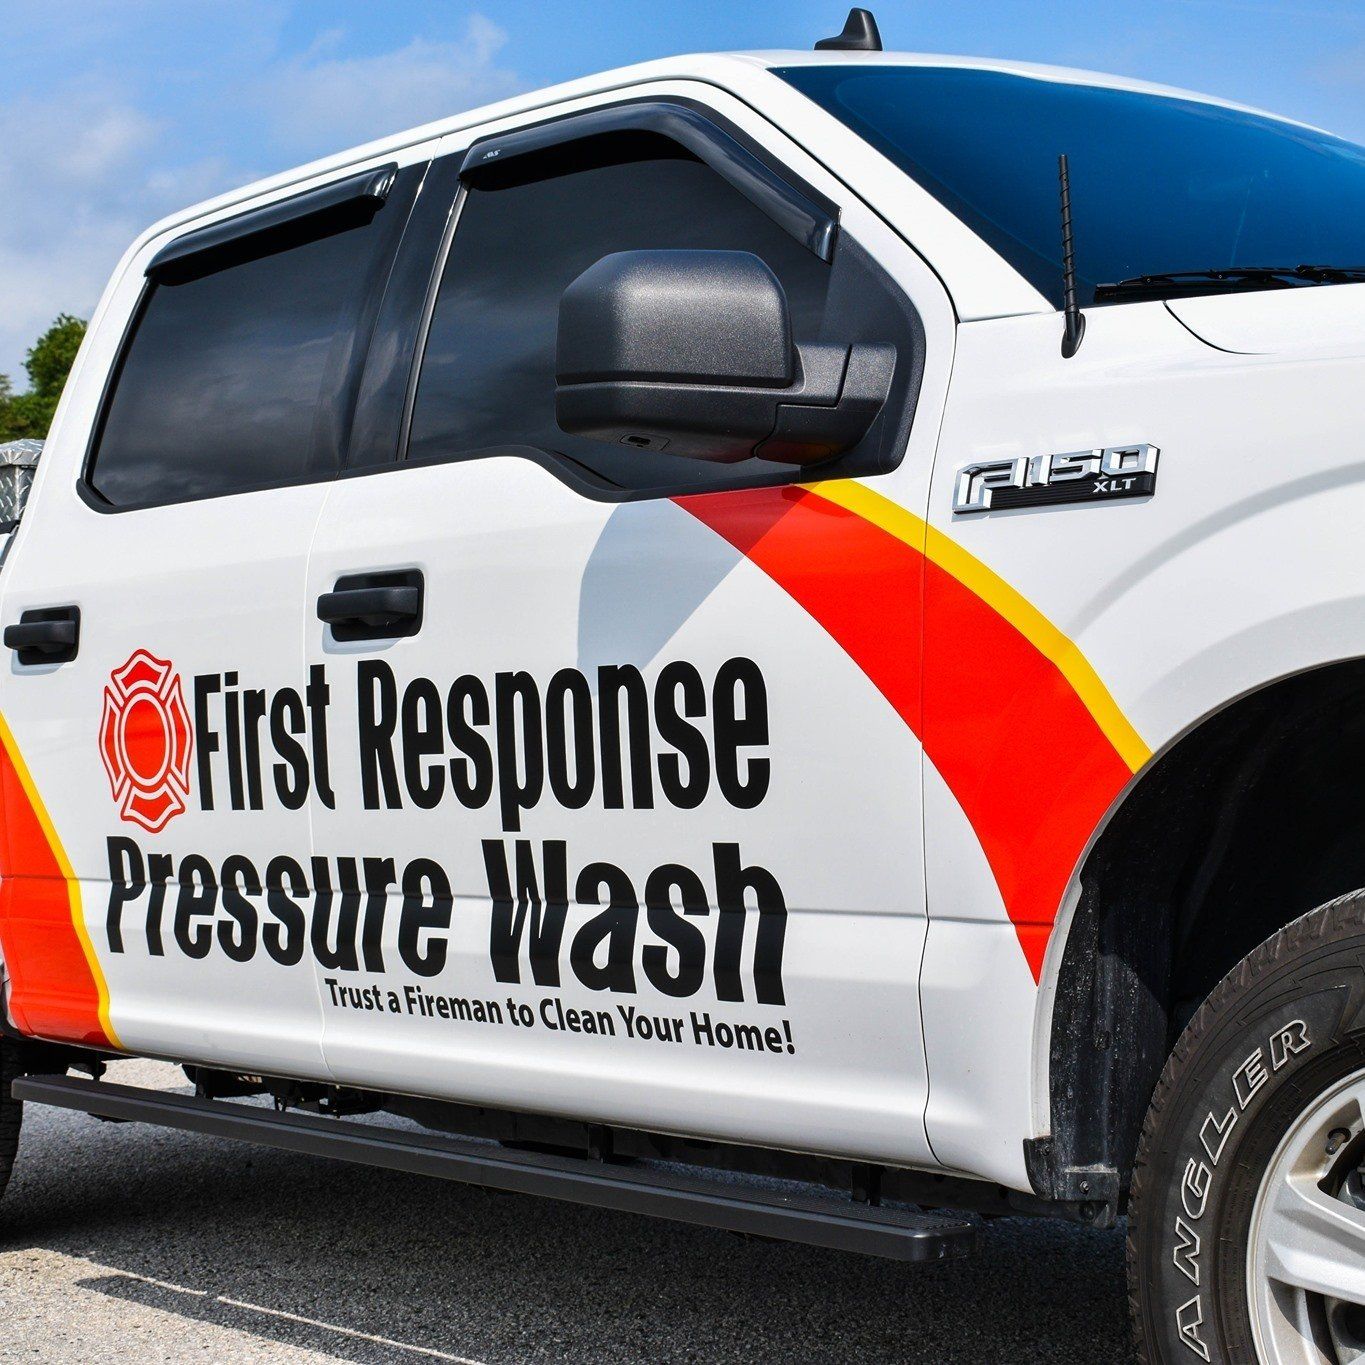 First Response Pressure Wash truck | Tampa, FL | First Response Pressure Wash